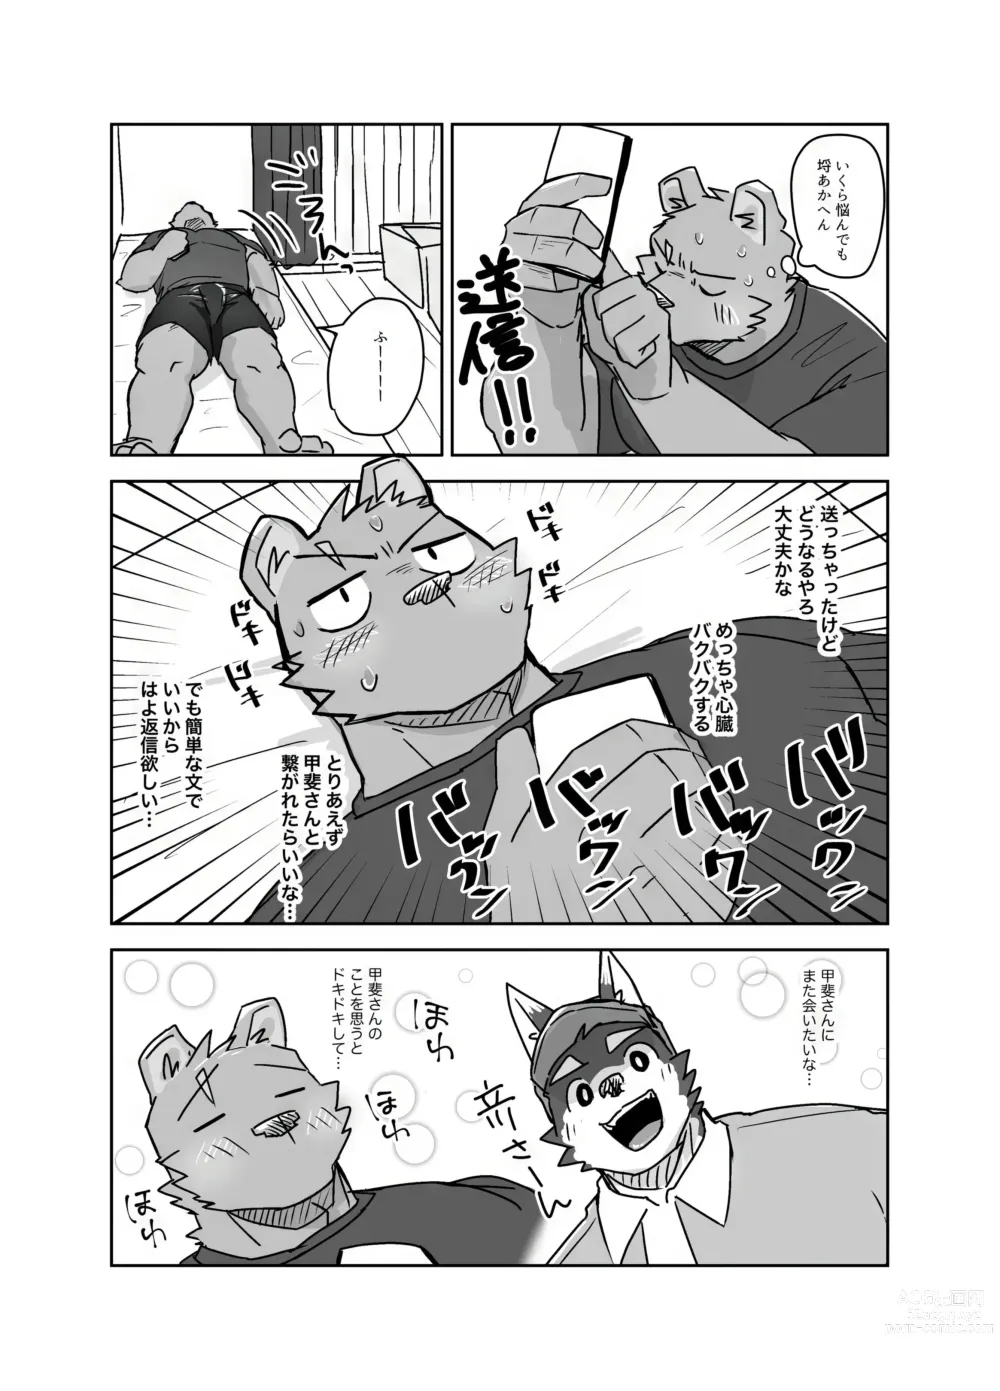 Page 4 of manga 【おまけ漫画】その日の夜